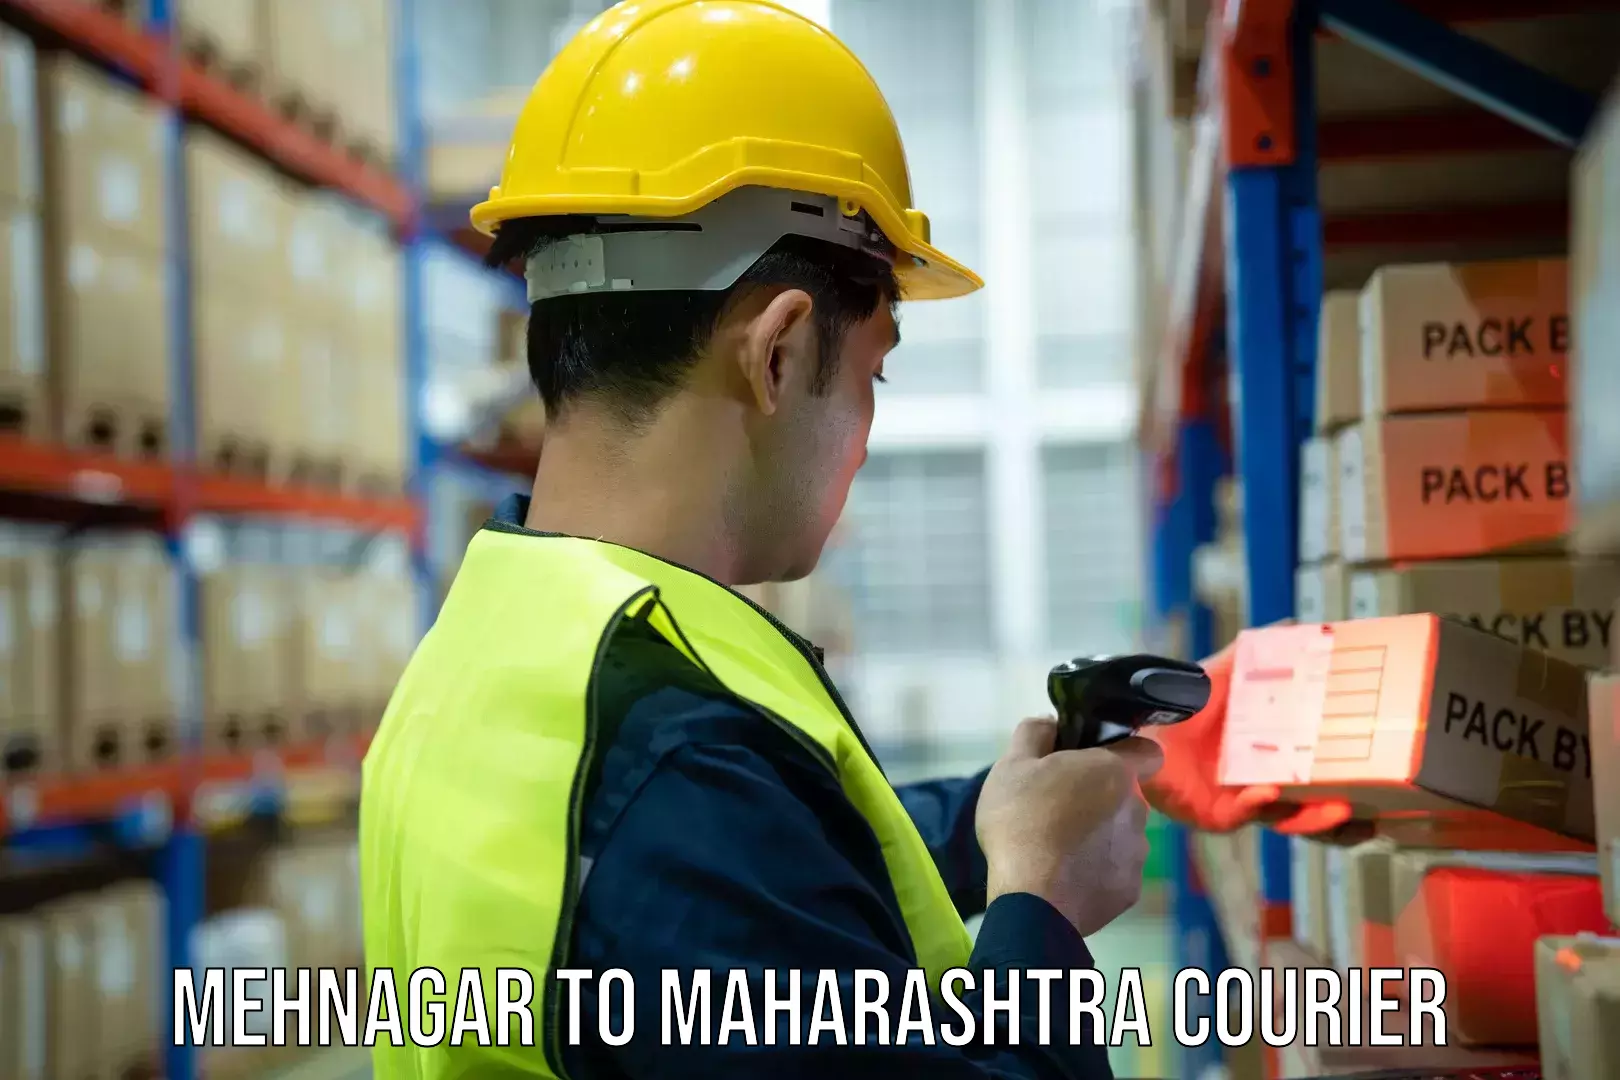 Courier service booking Mehnagar to Maharashtra